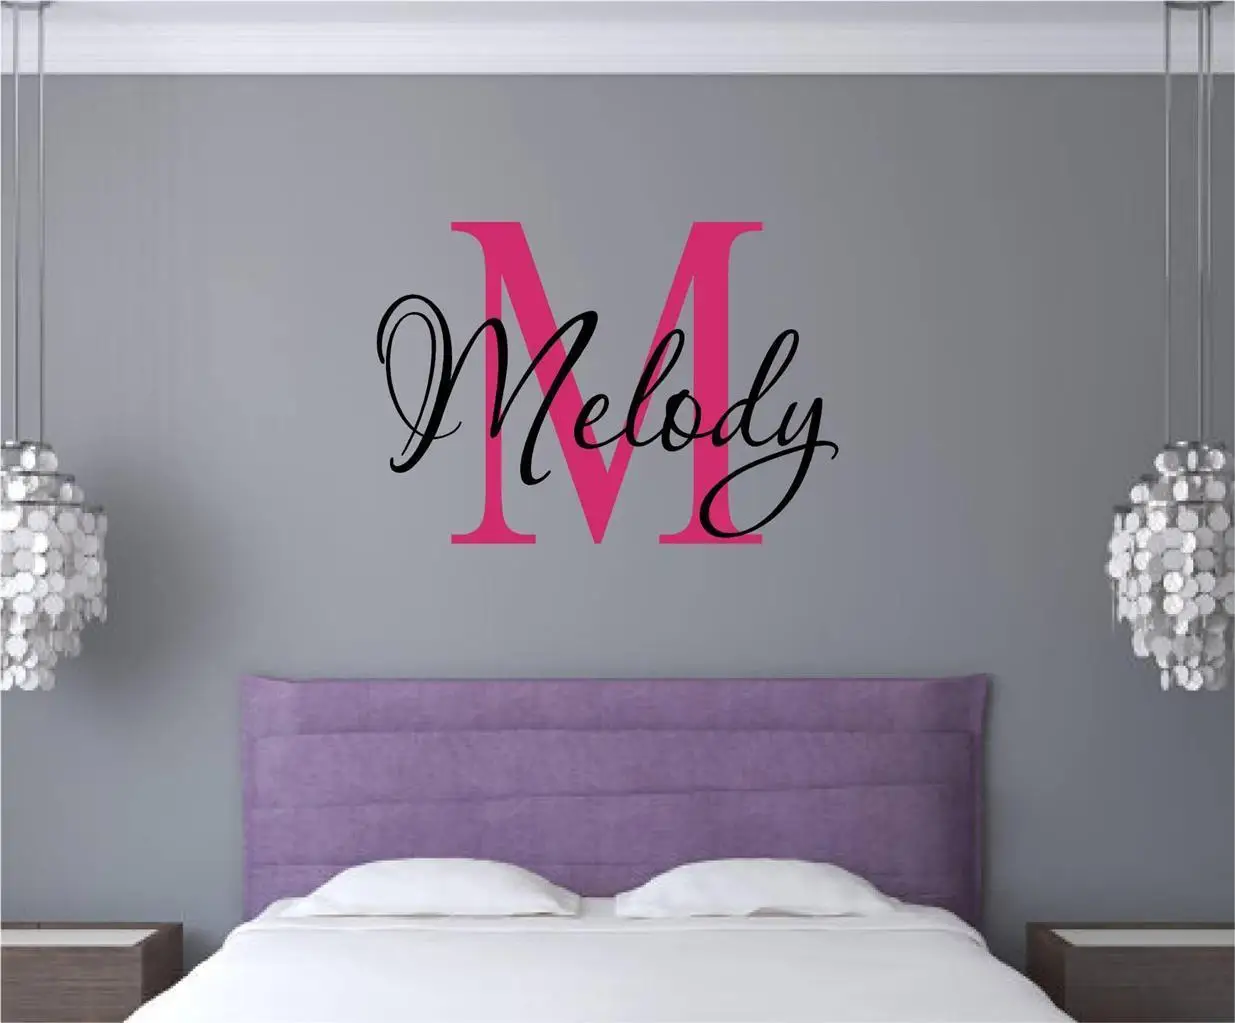 Vinyl Decal Wall Sticker Art Bedroom Living Room Decor Floral Letter Monogram M